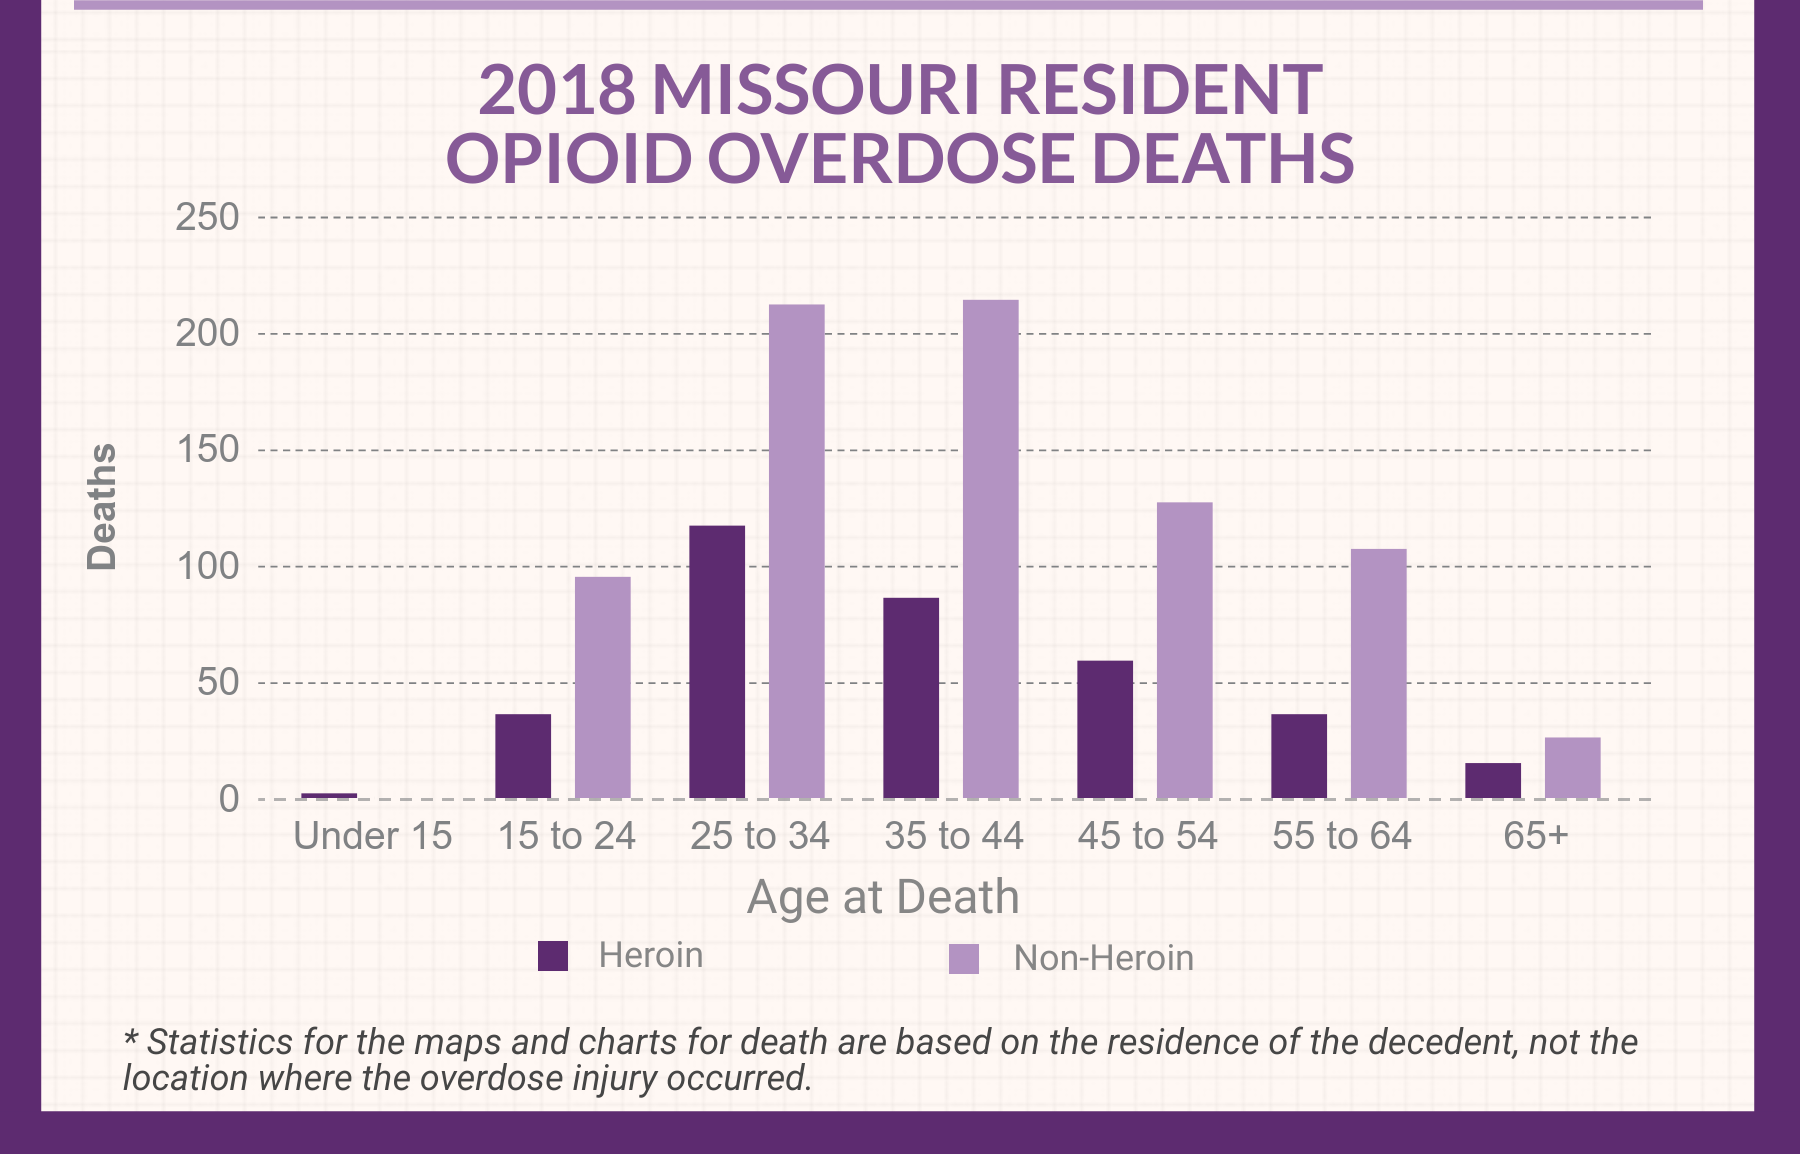 opioid the death toll 2018 missouri resident opioid overdose deaths image